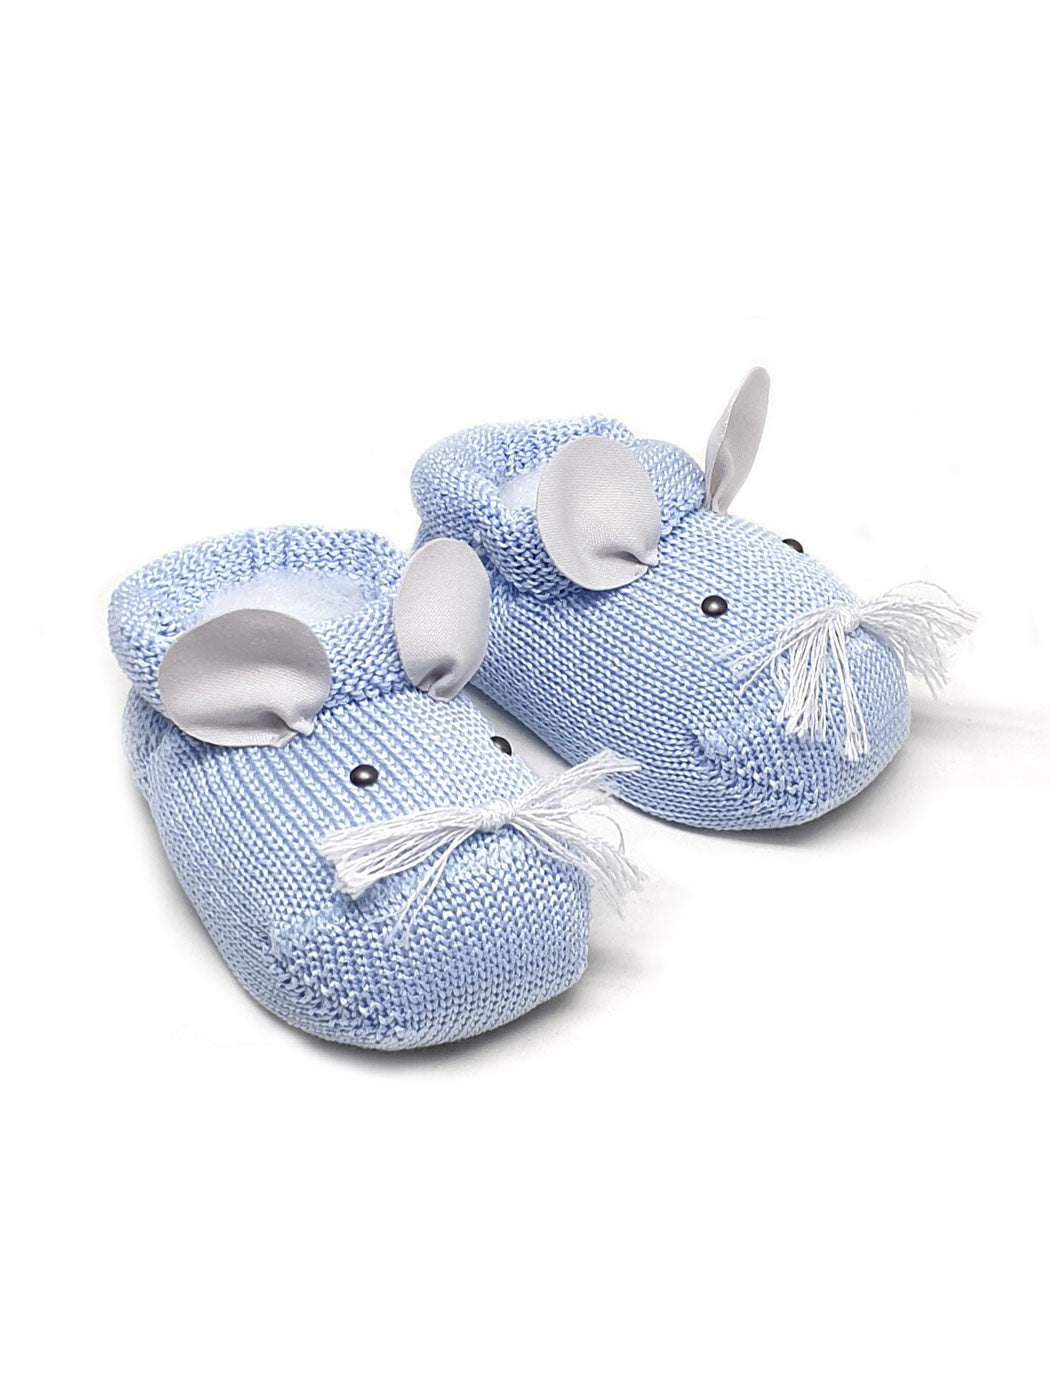 STORY LORIS - Baby Light Blue bonnet & Booties Gift Set-21195